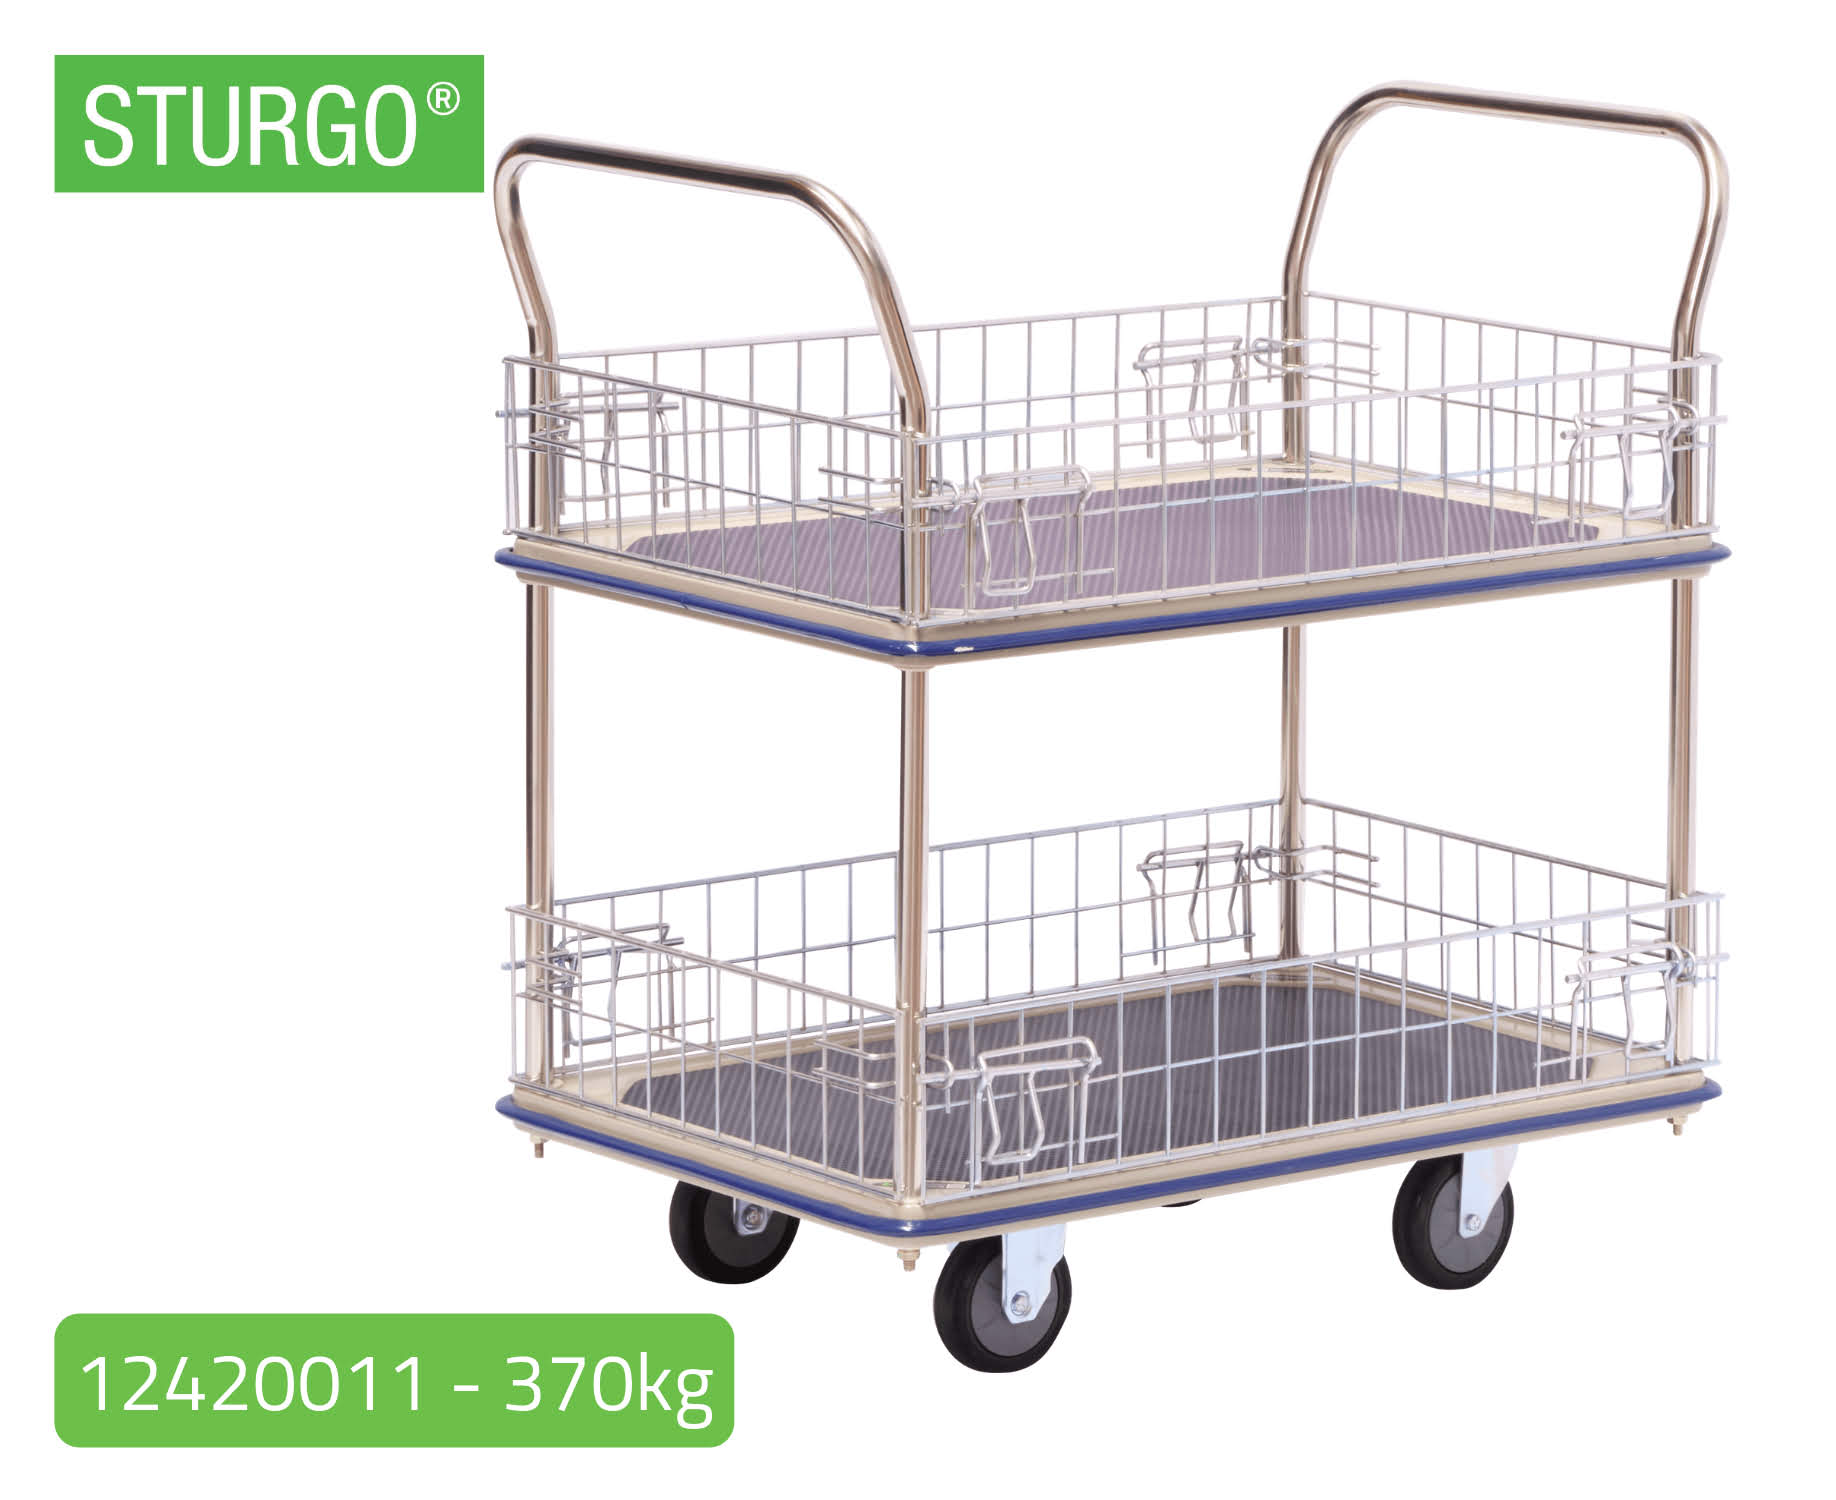 STURGO® Double Platform Trolley - Mesh Sides